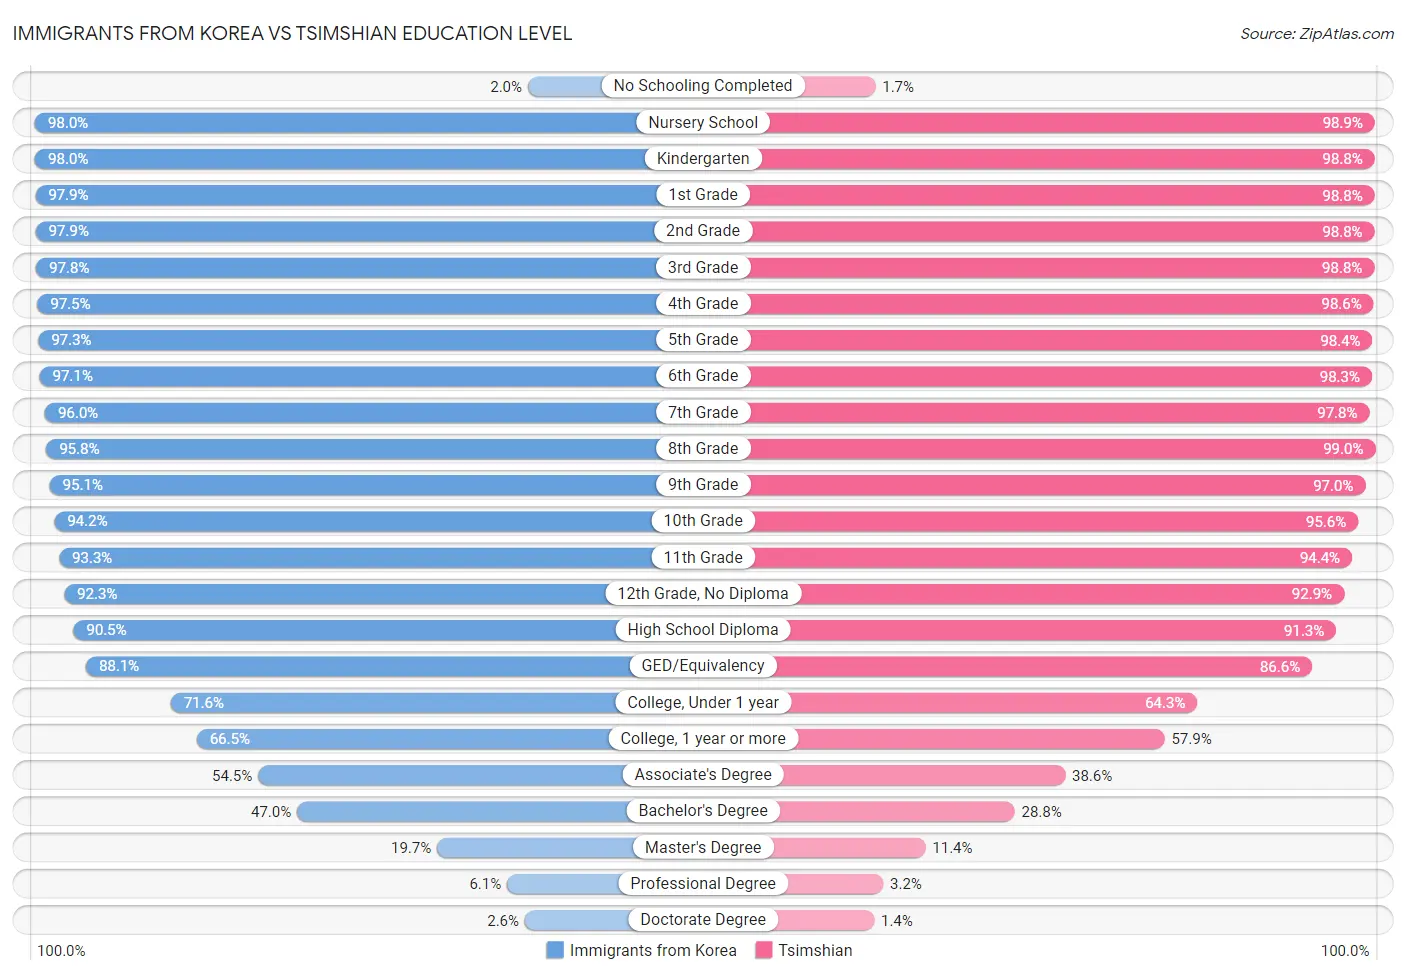 Immigrants from Korea vs Tsimshian Education Level